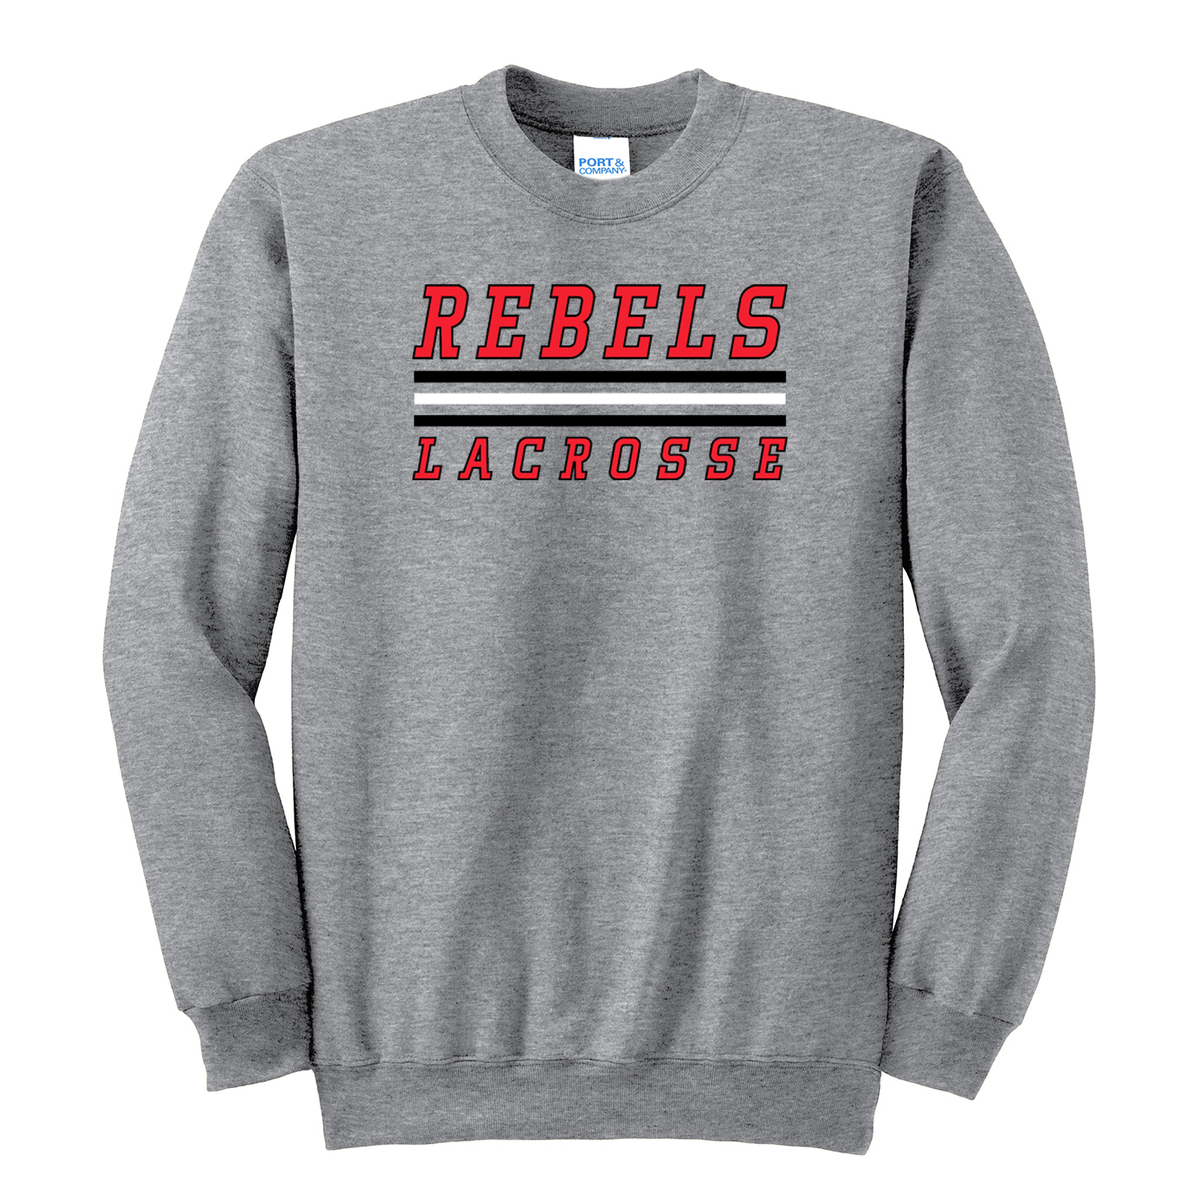 Rebels Lacrosse Crew Neck Sweater